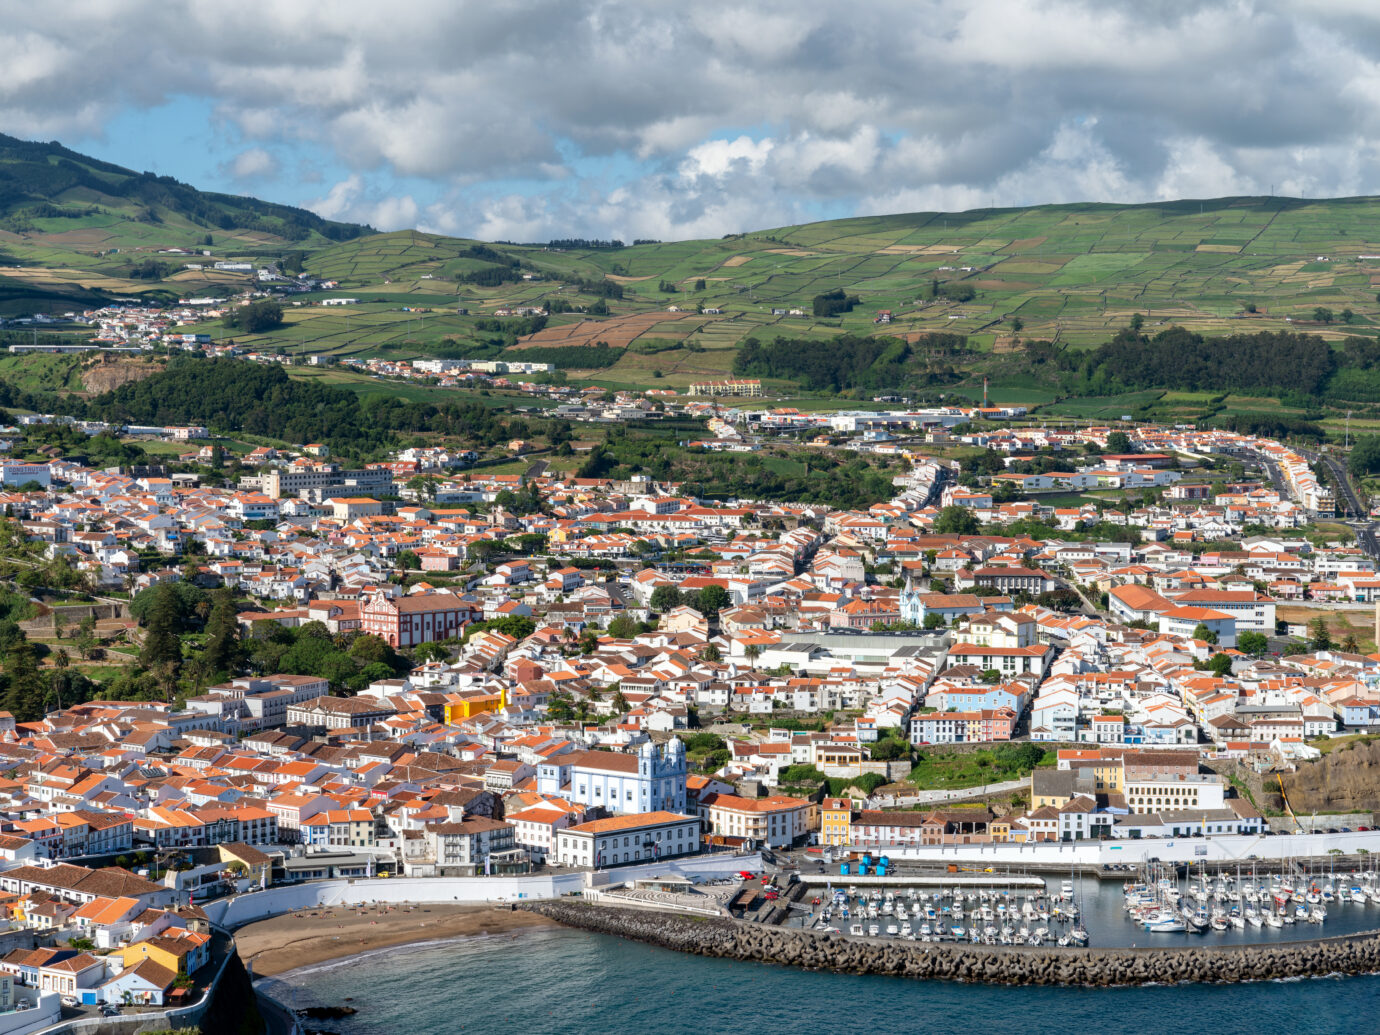 Town of Angra do Heroismo on Terciera Island, Azores